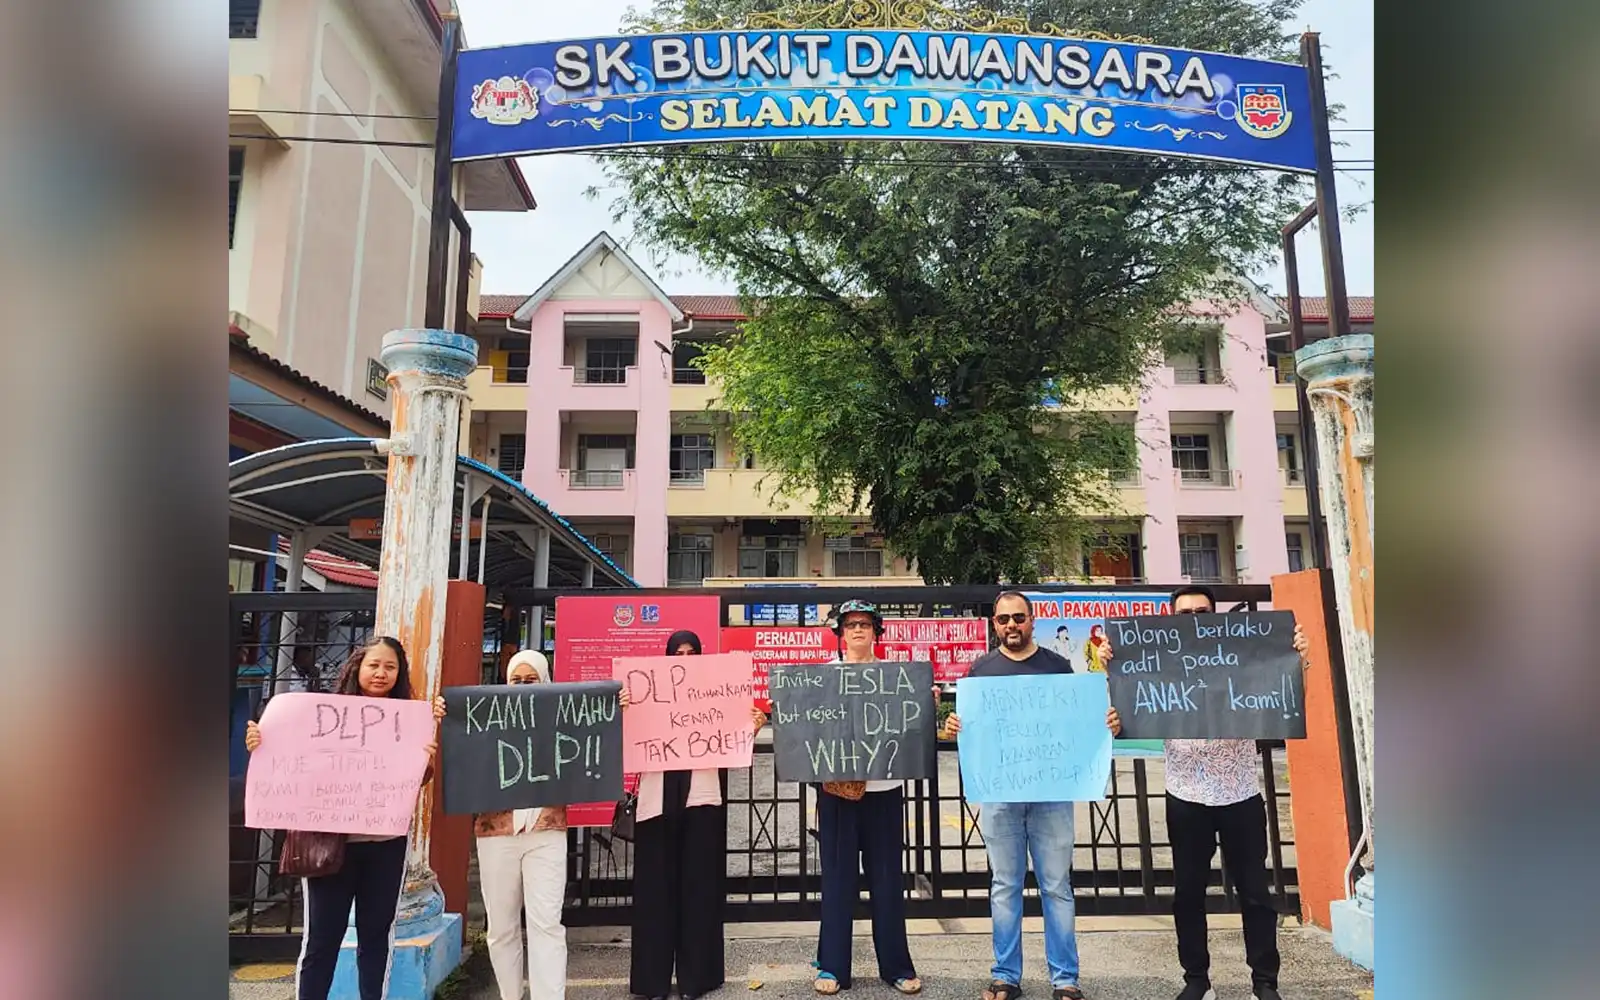 Parents protest scaling back of DLP at KL school